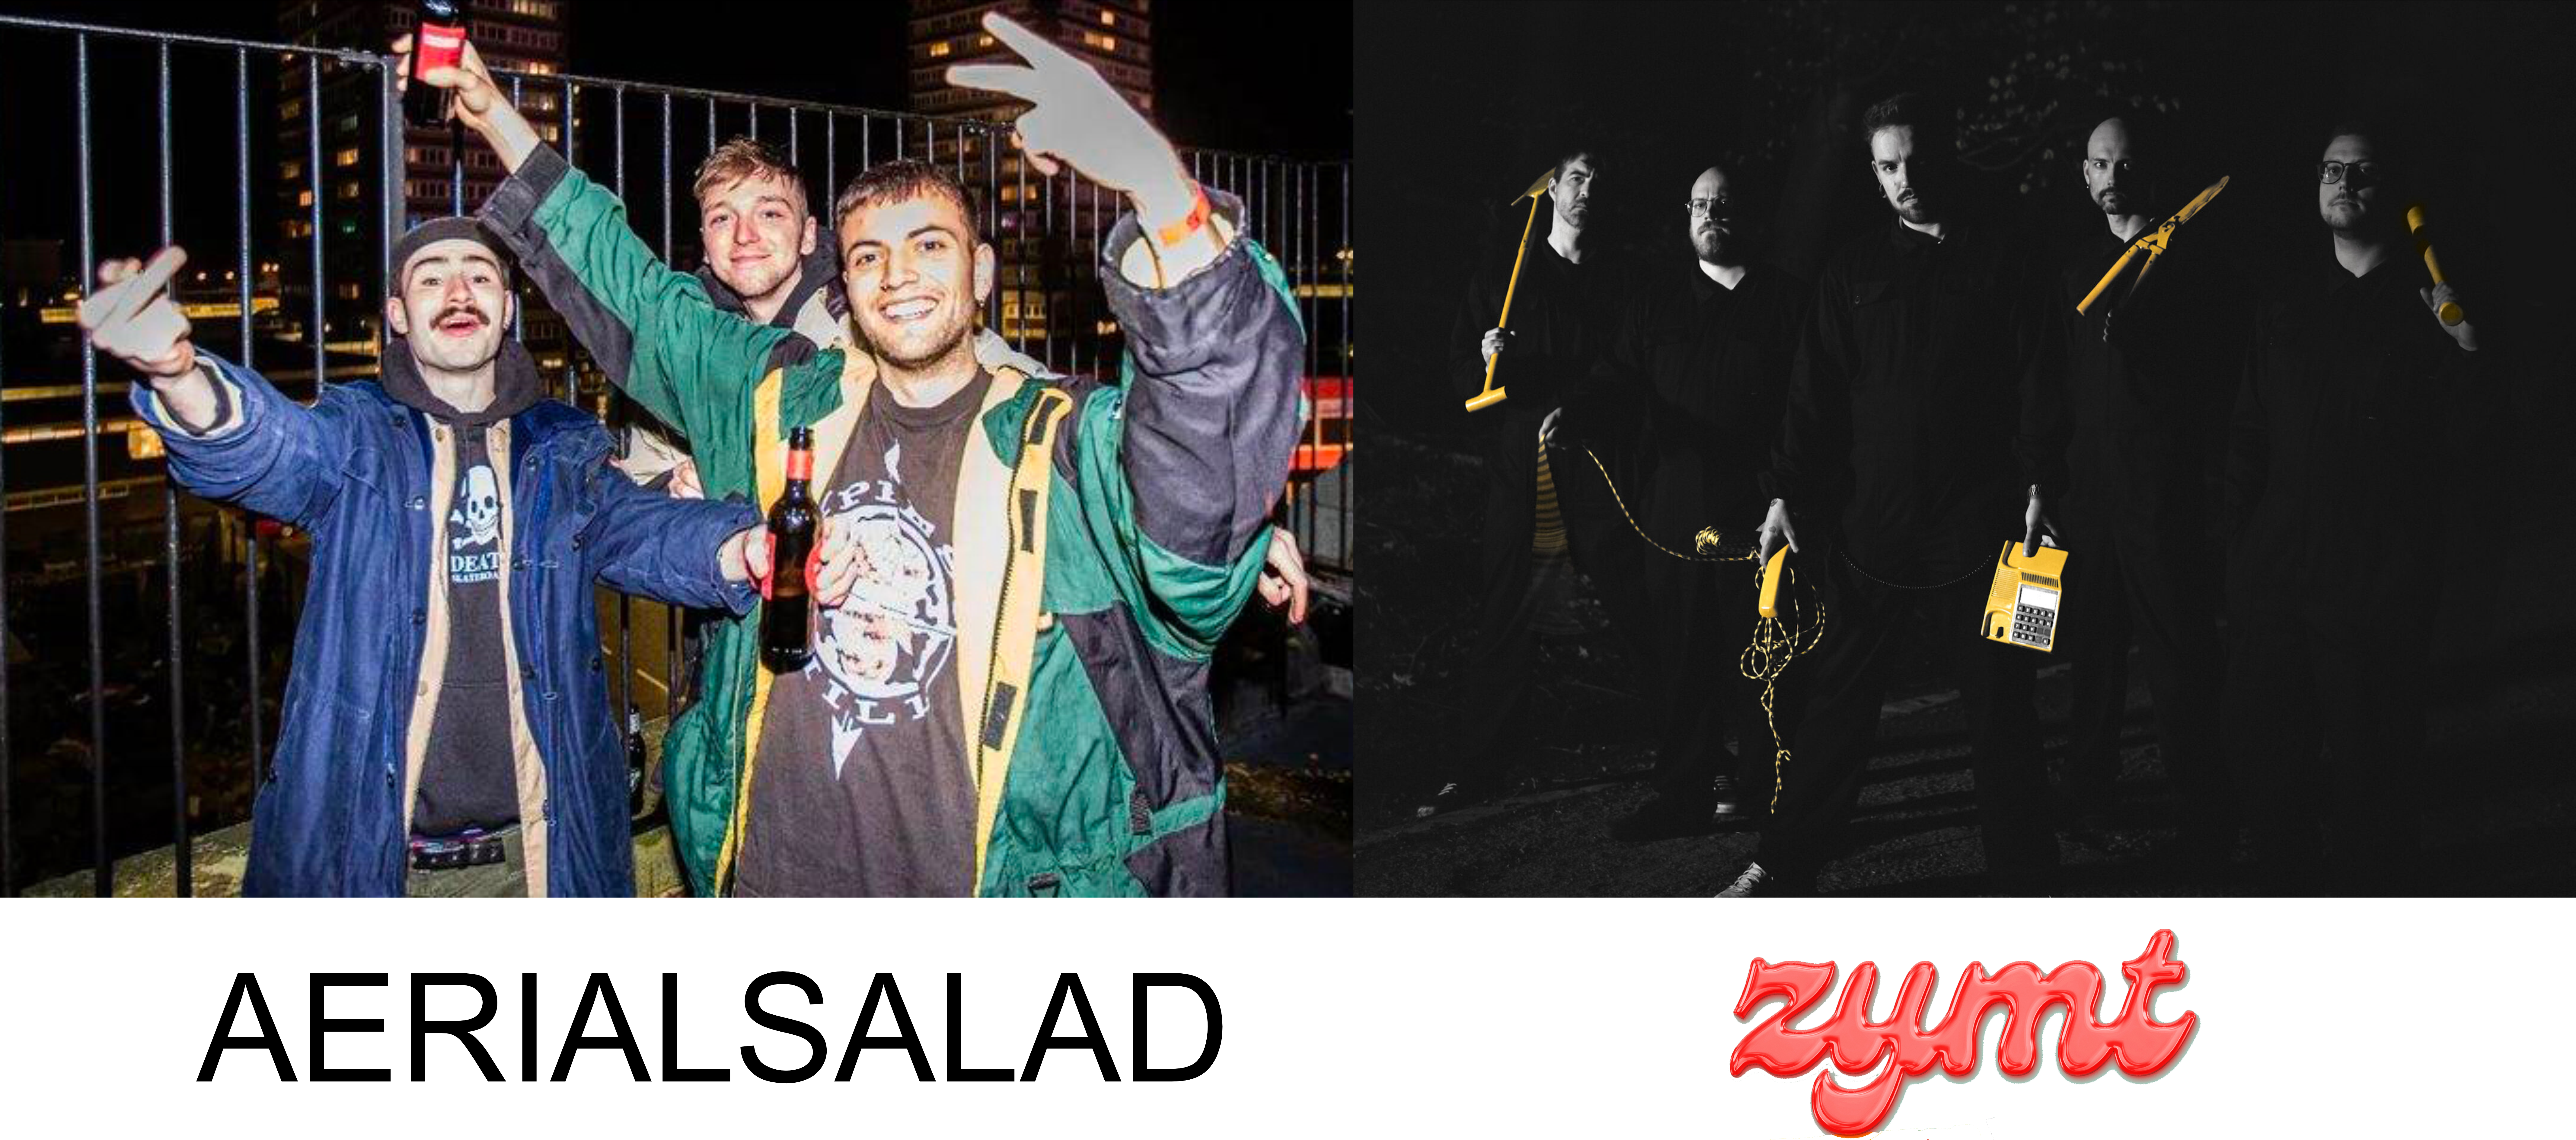 Aerial Salad + Zymt